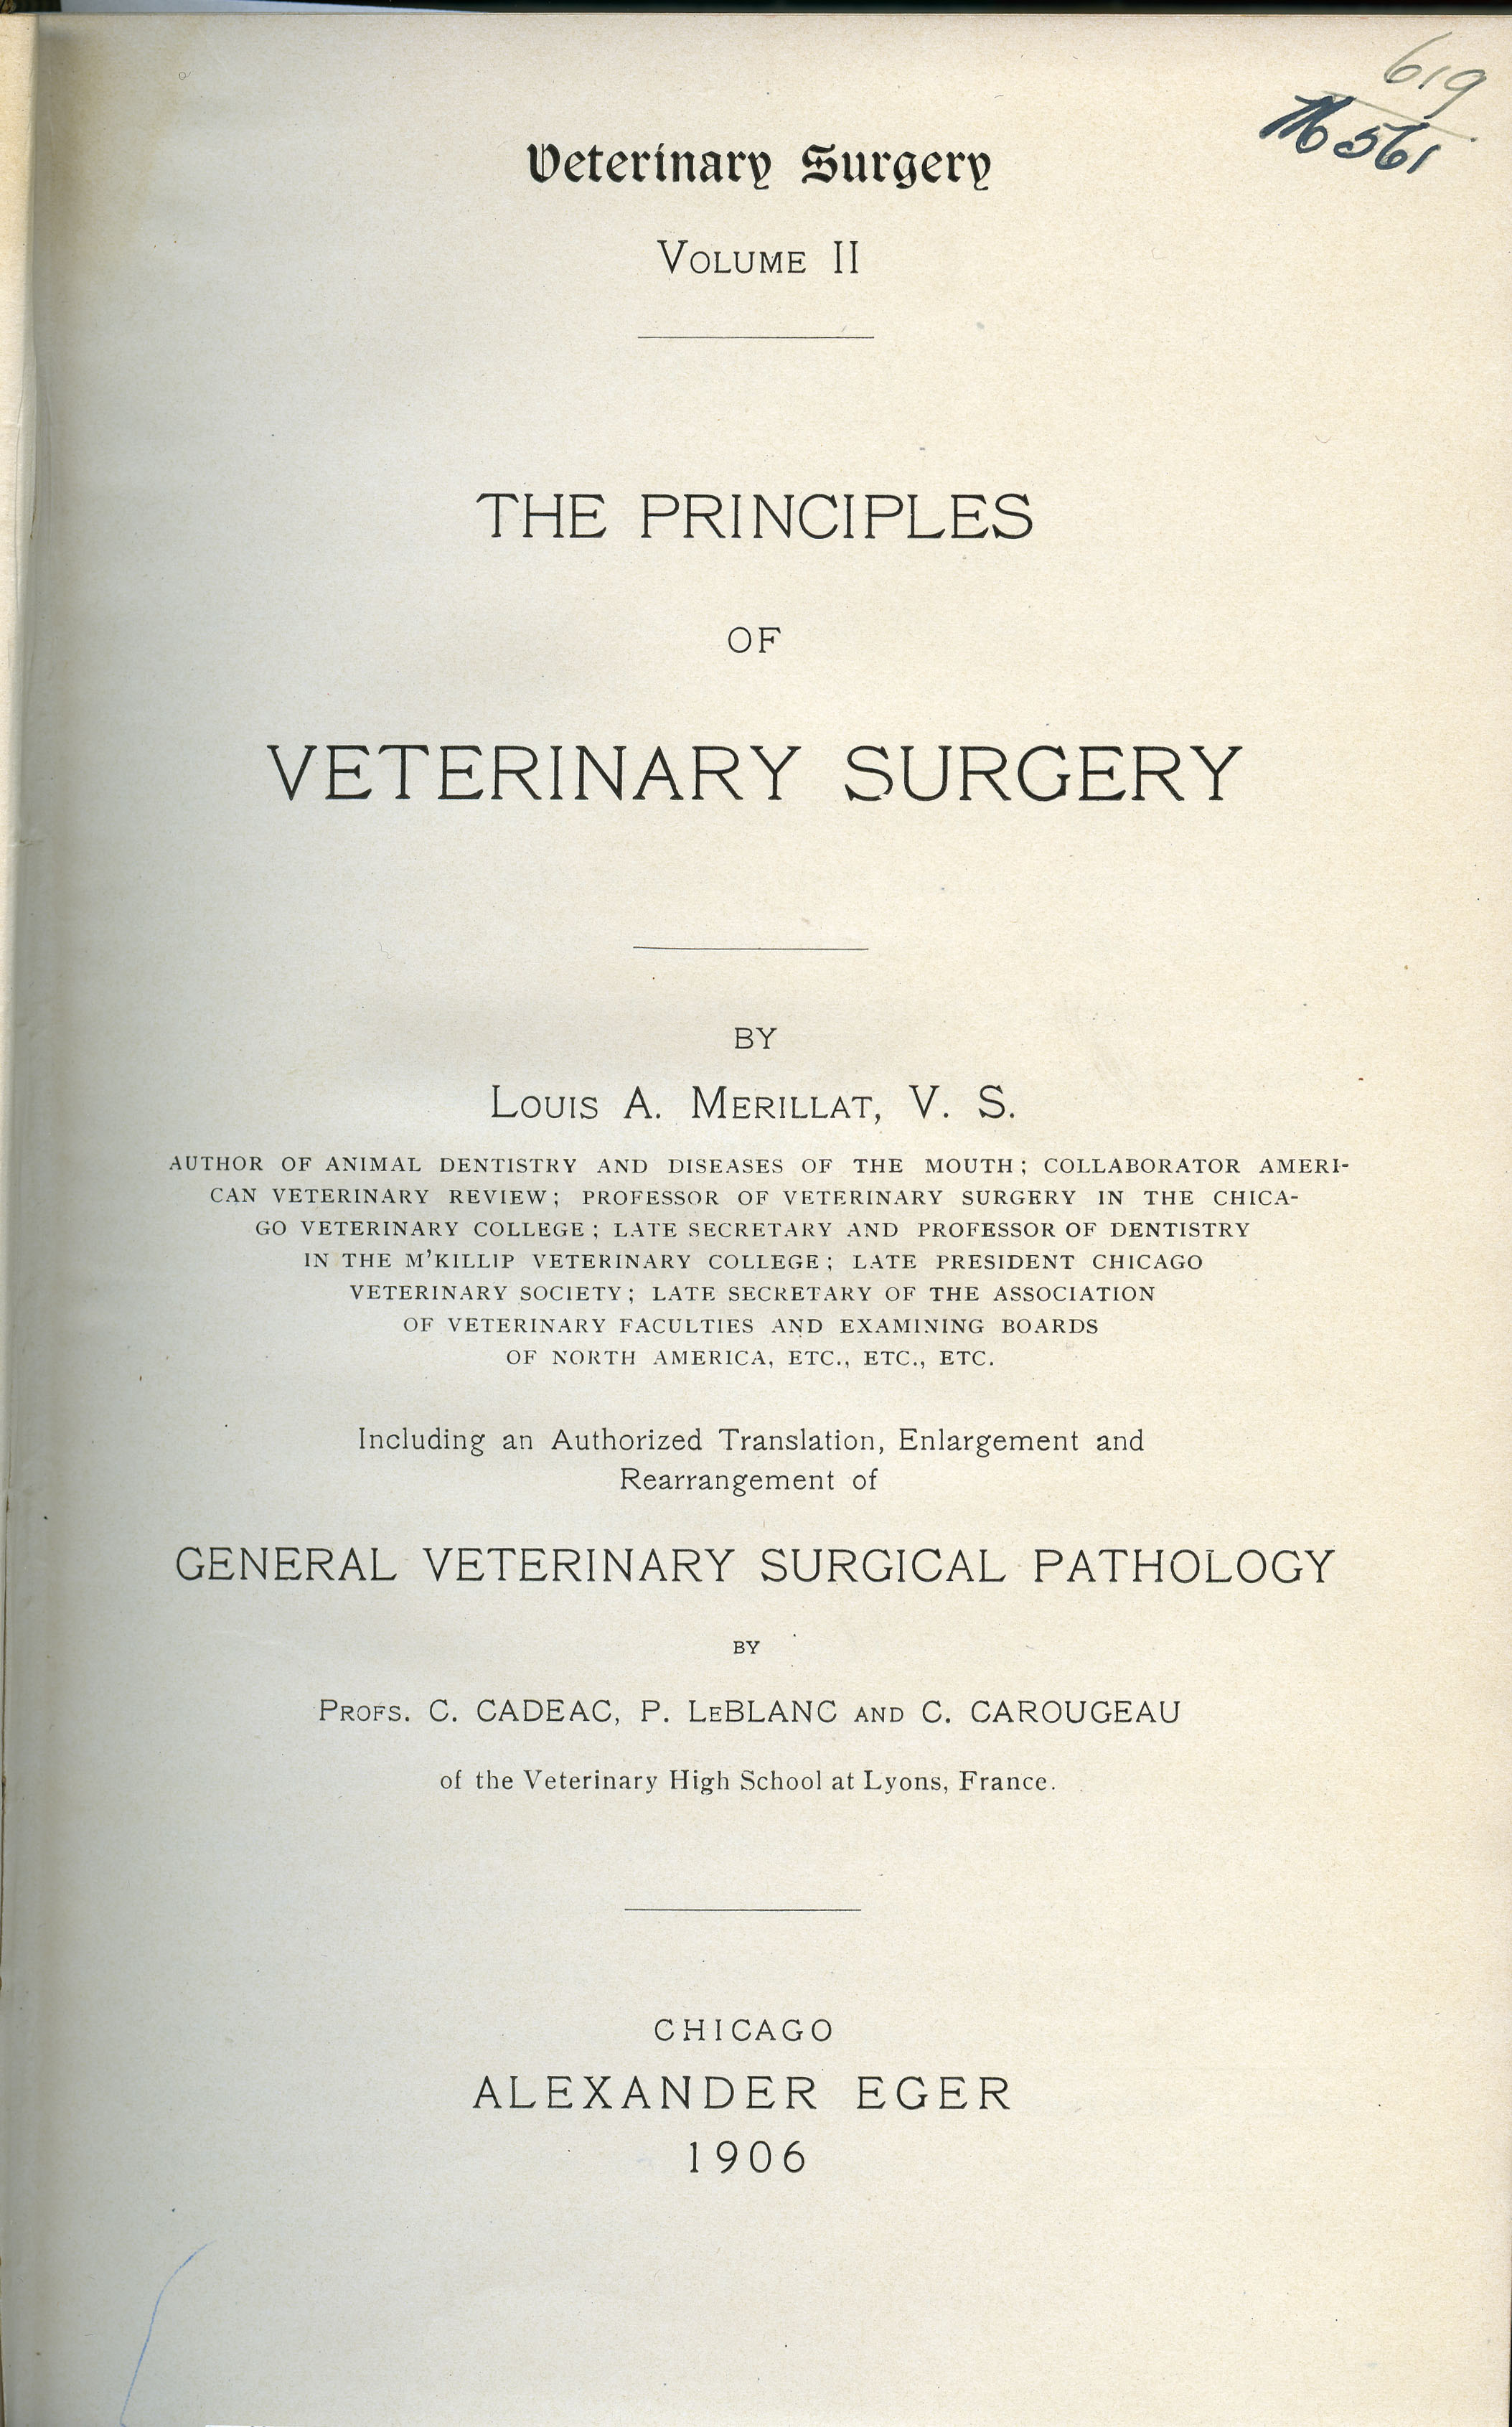 Merillat's Principles of Veterinary Surgery